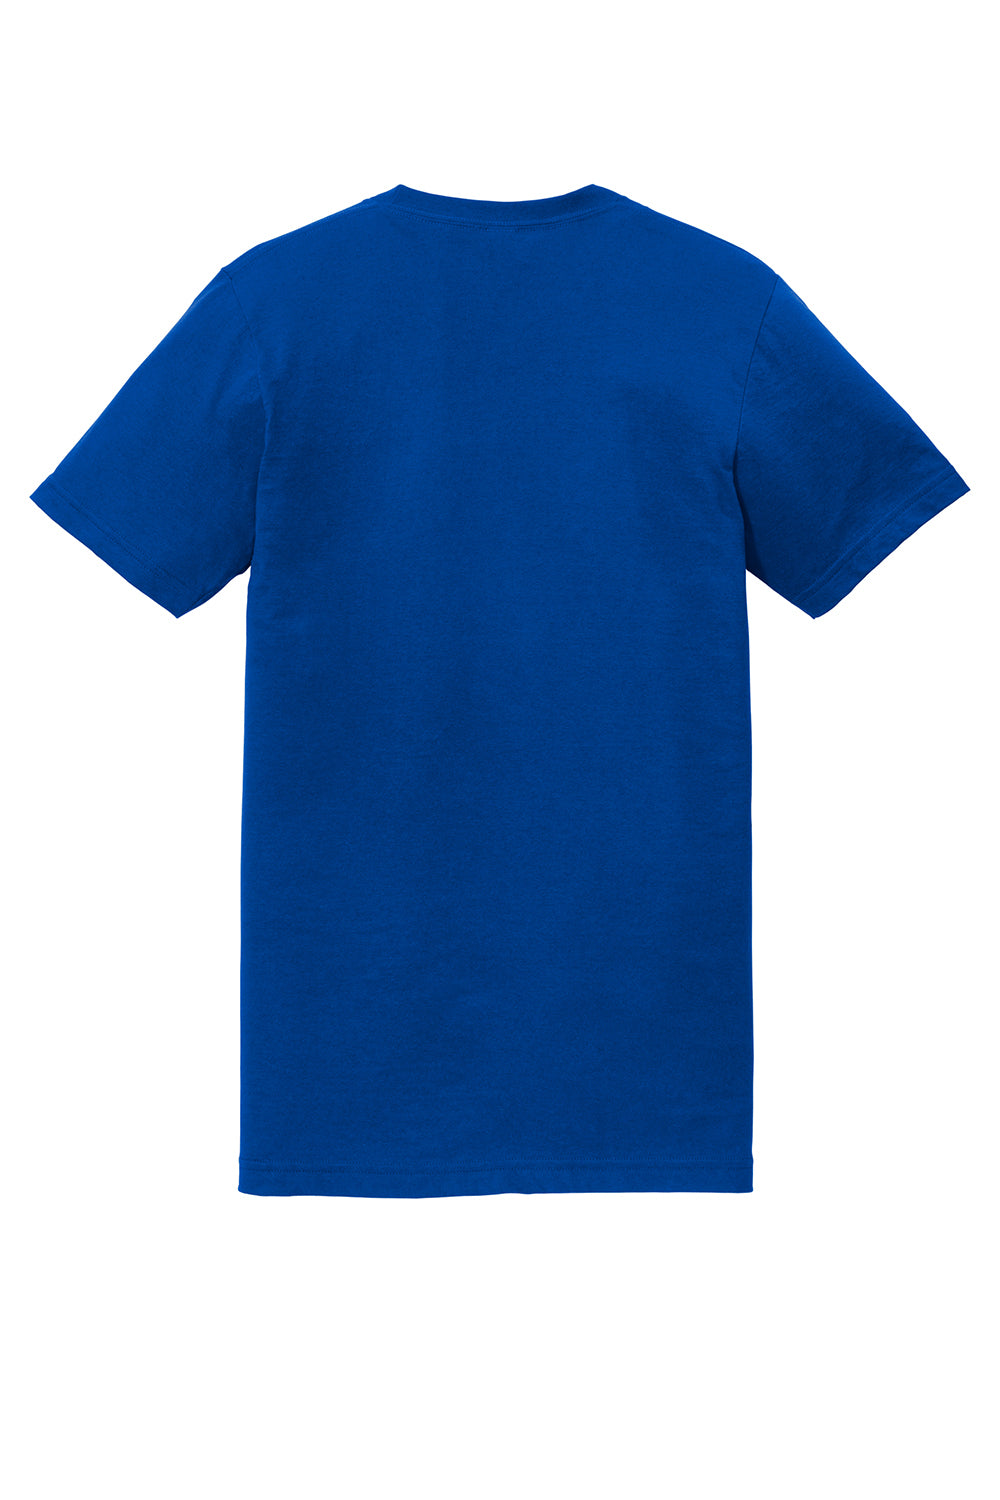 American Apparel 2001 Mens Fine Jersey Short Sleeve Crewneck T-Shirt Royal Blue Flat Back